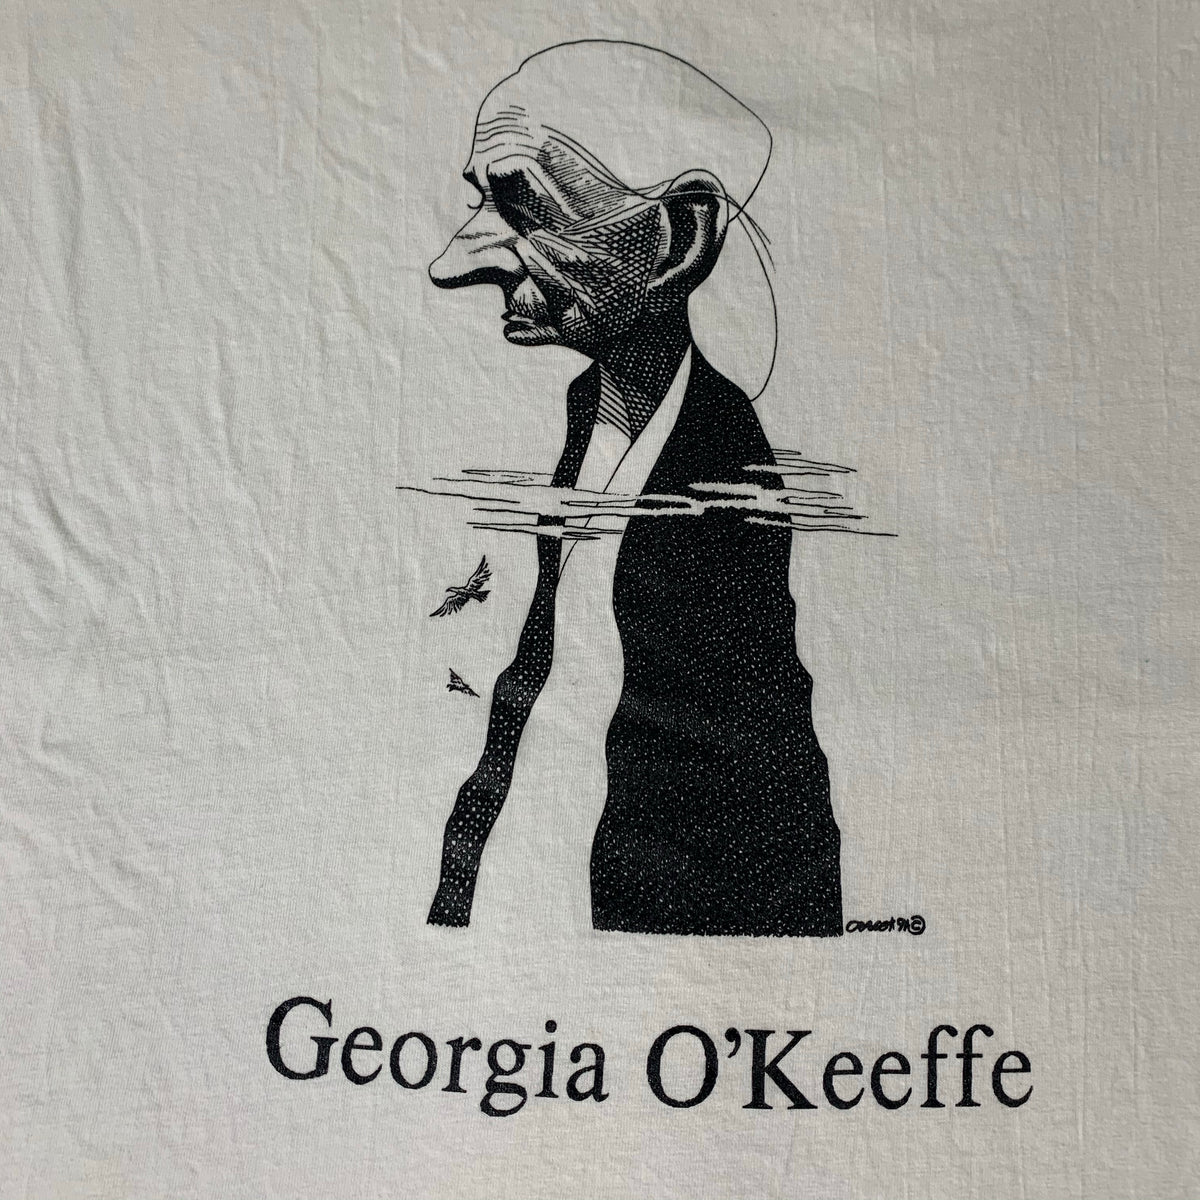 Vintage Georgia O’Keeffe “Sketch” T-Shirt